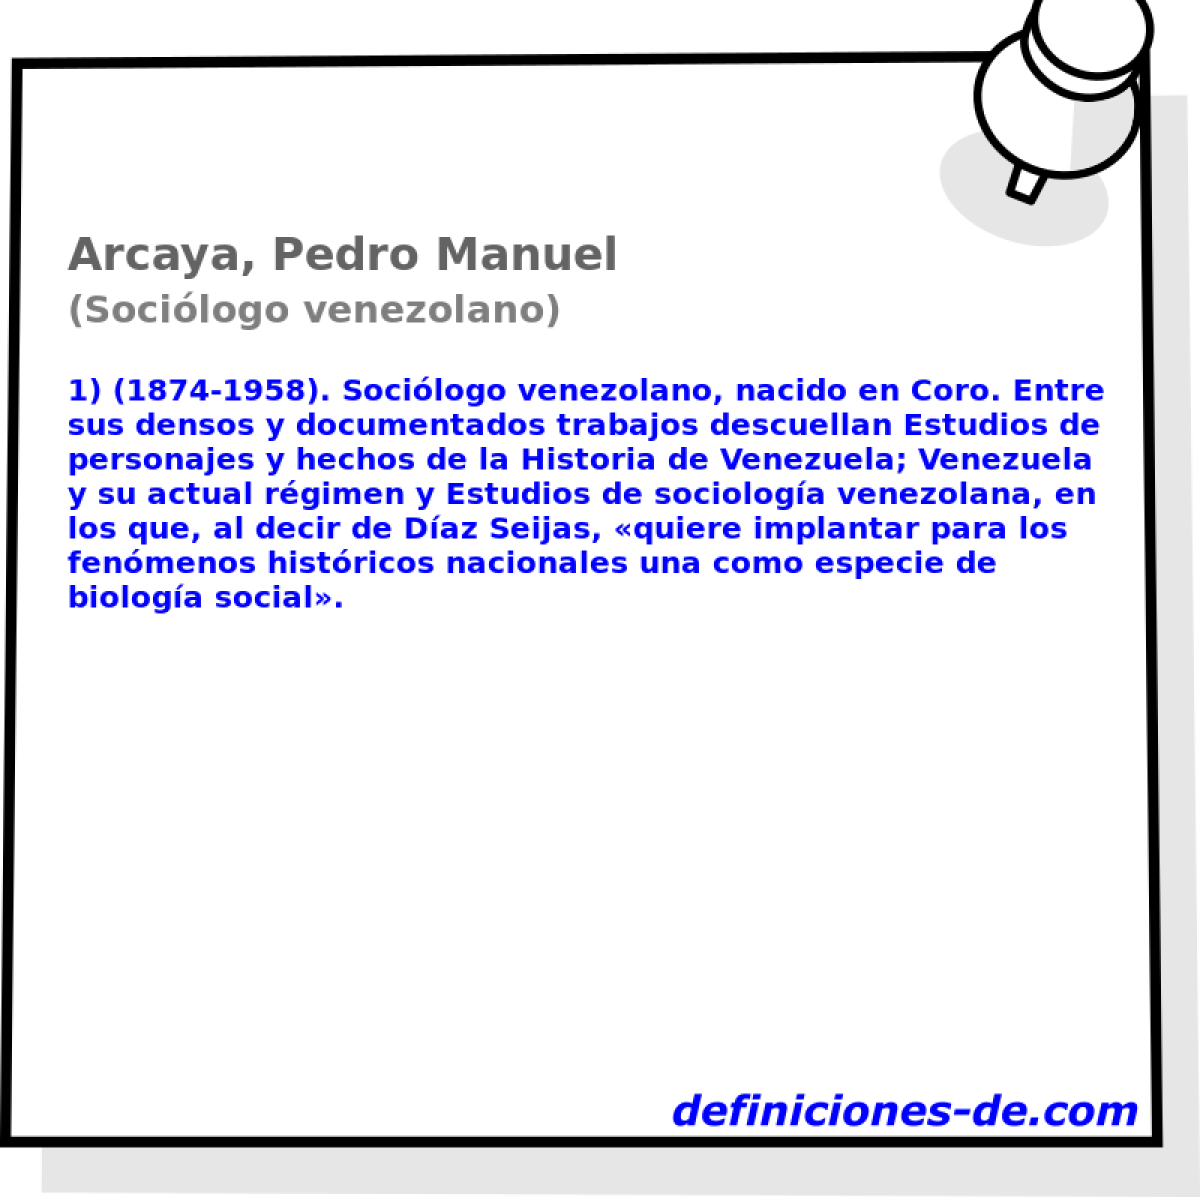 Arcaya, Pedro Manuel (Socilogo venezolano)